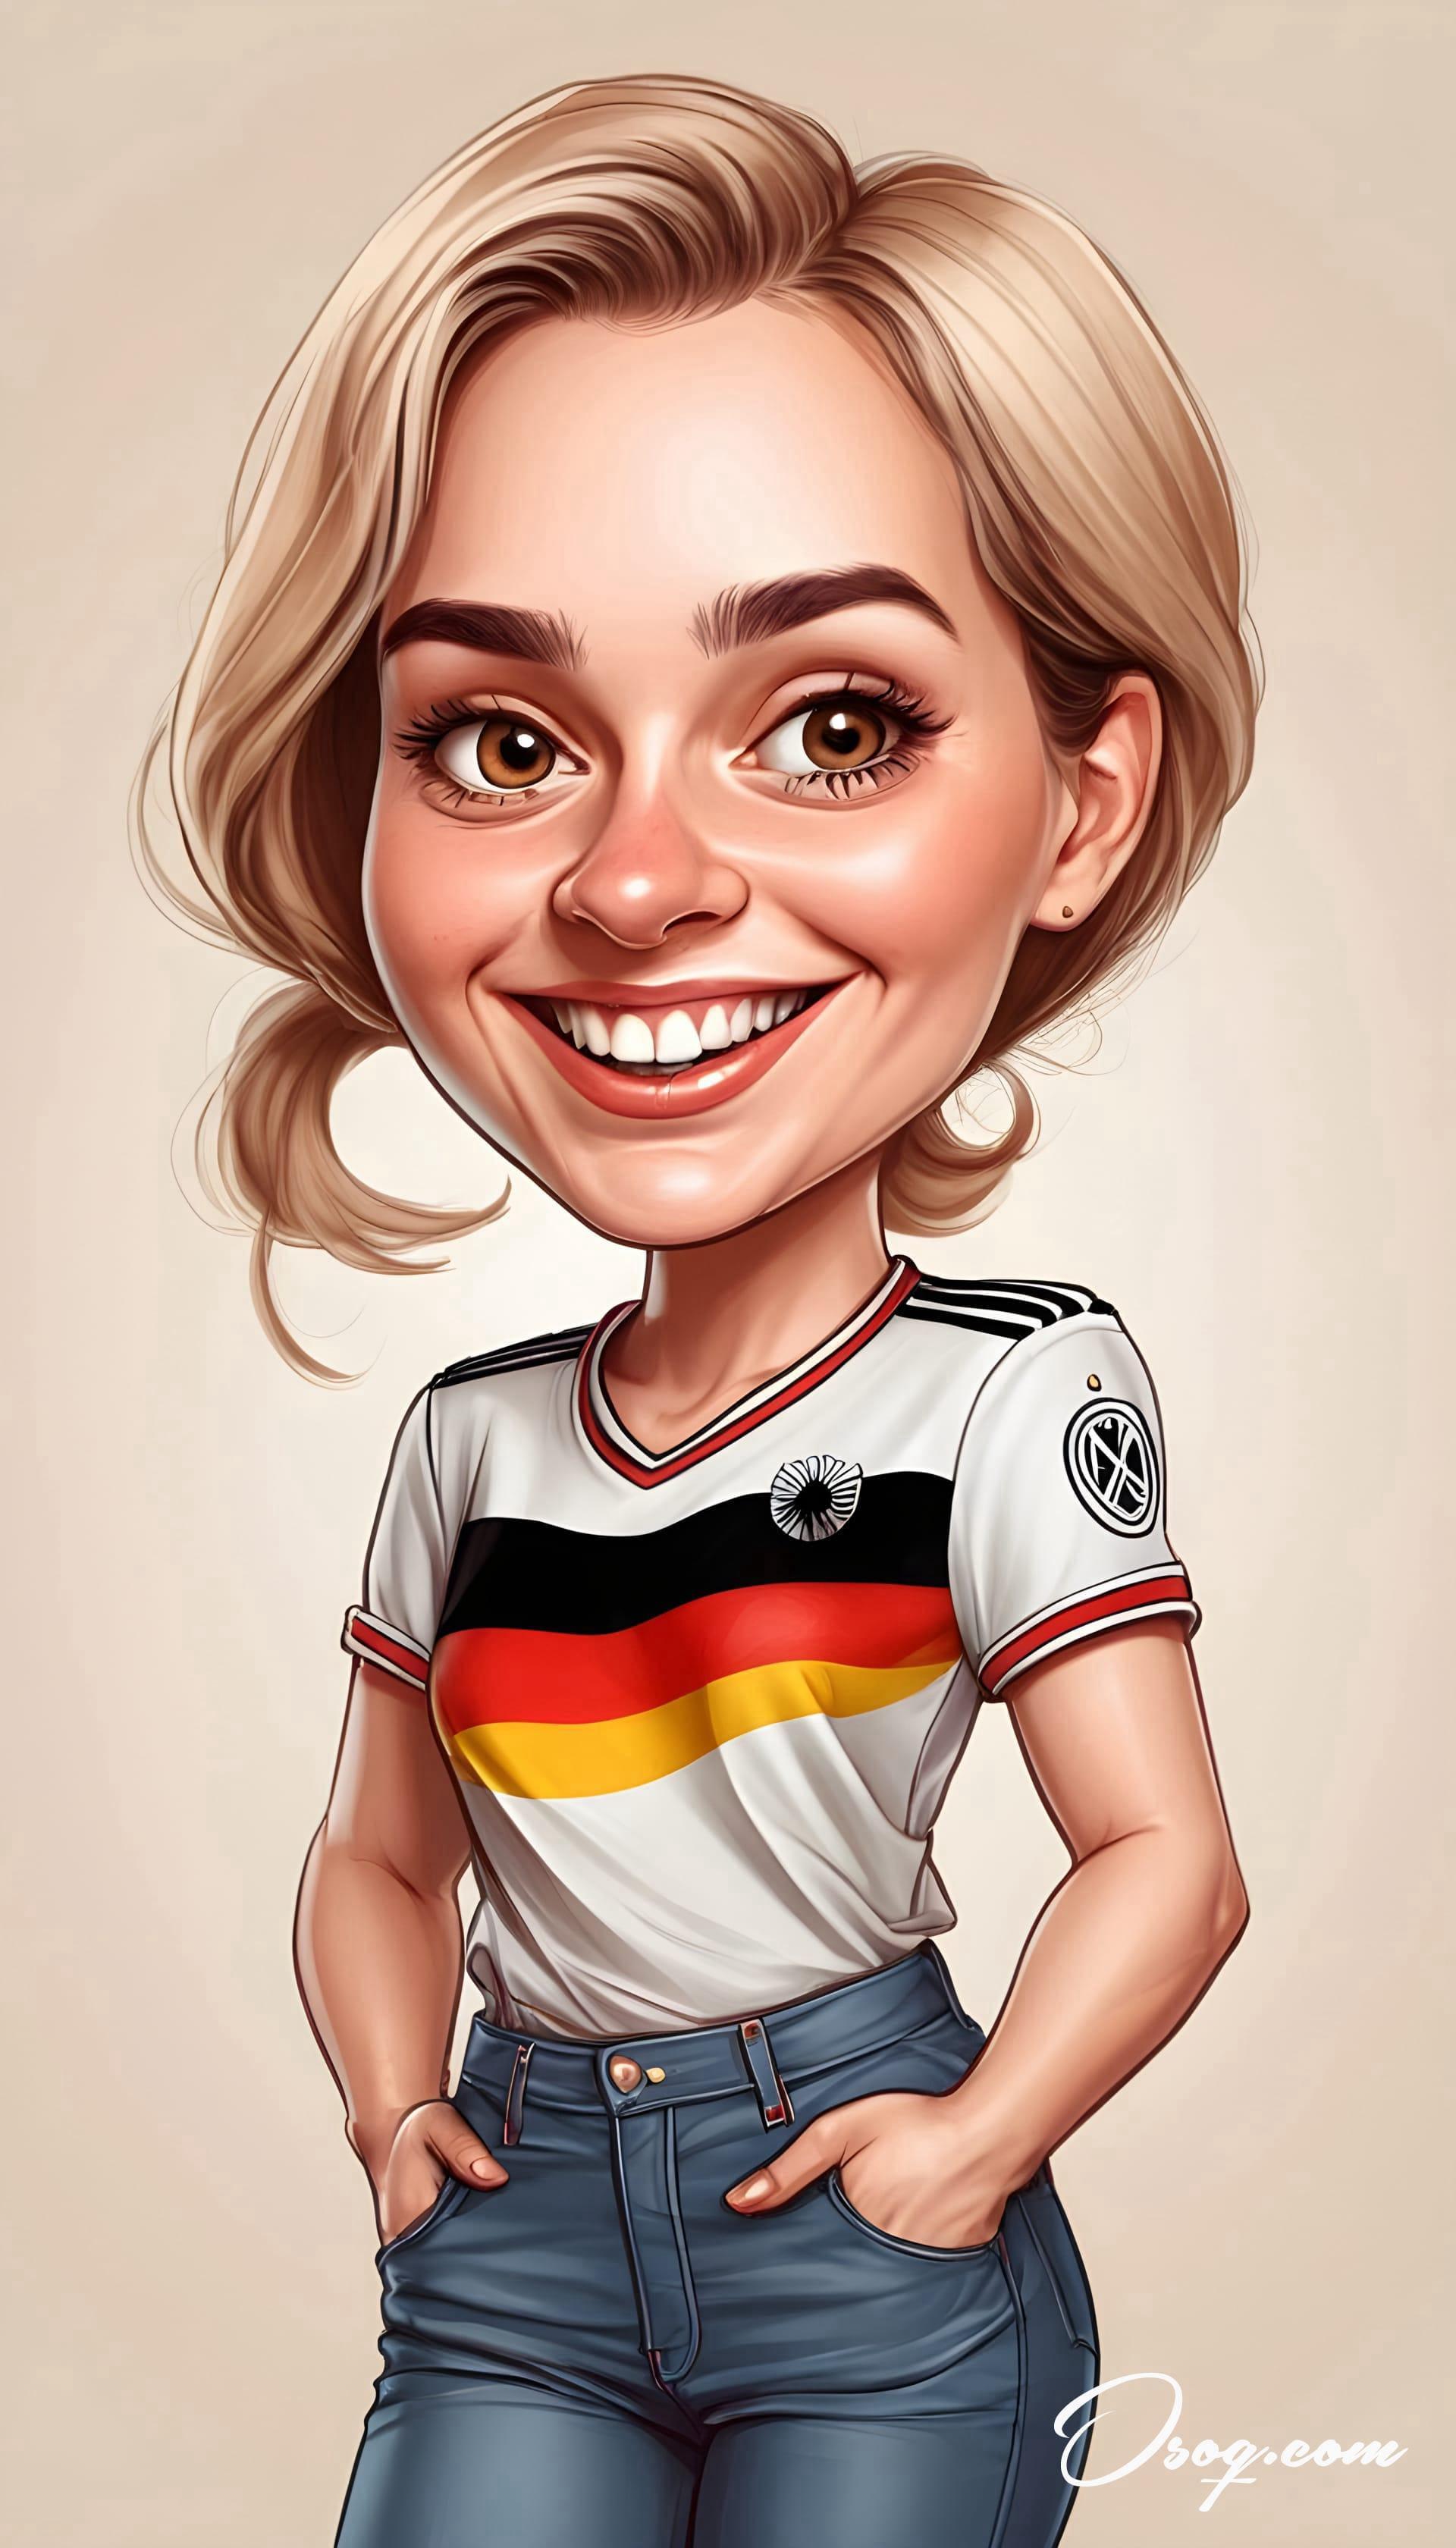 German cartoon 02